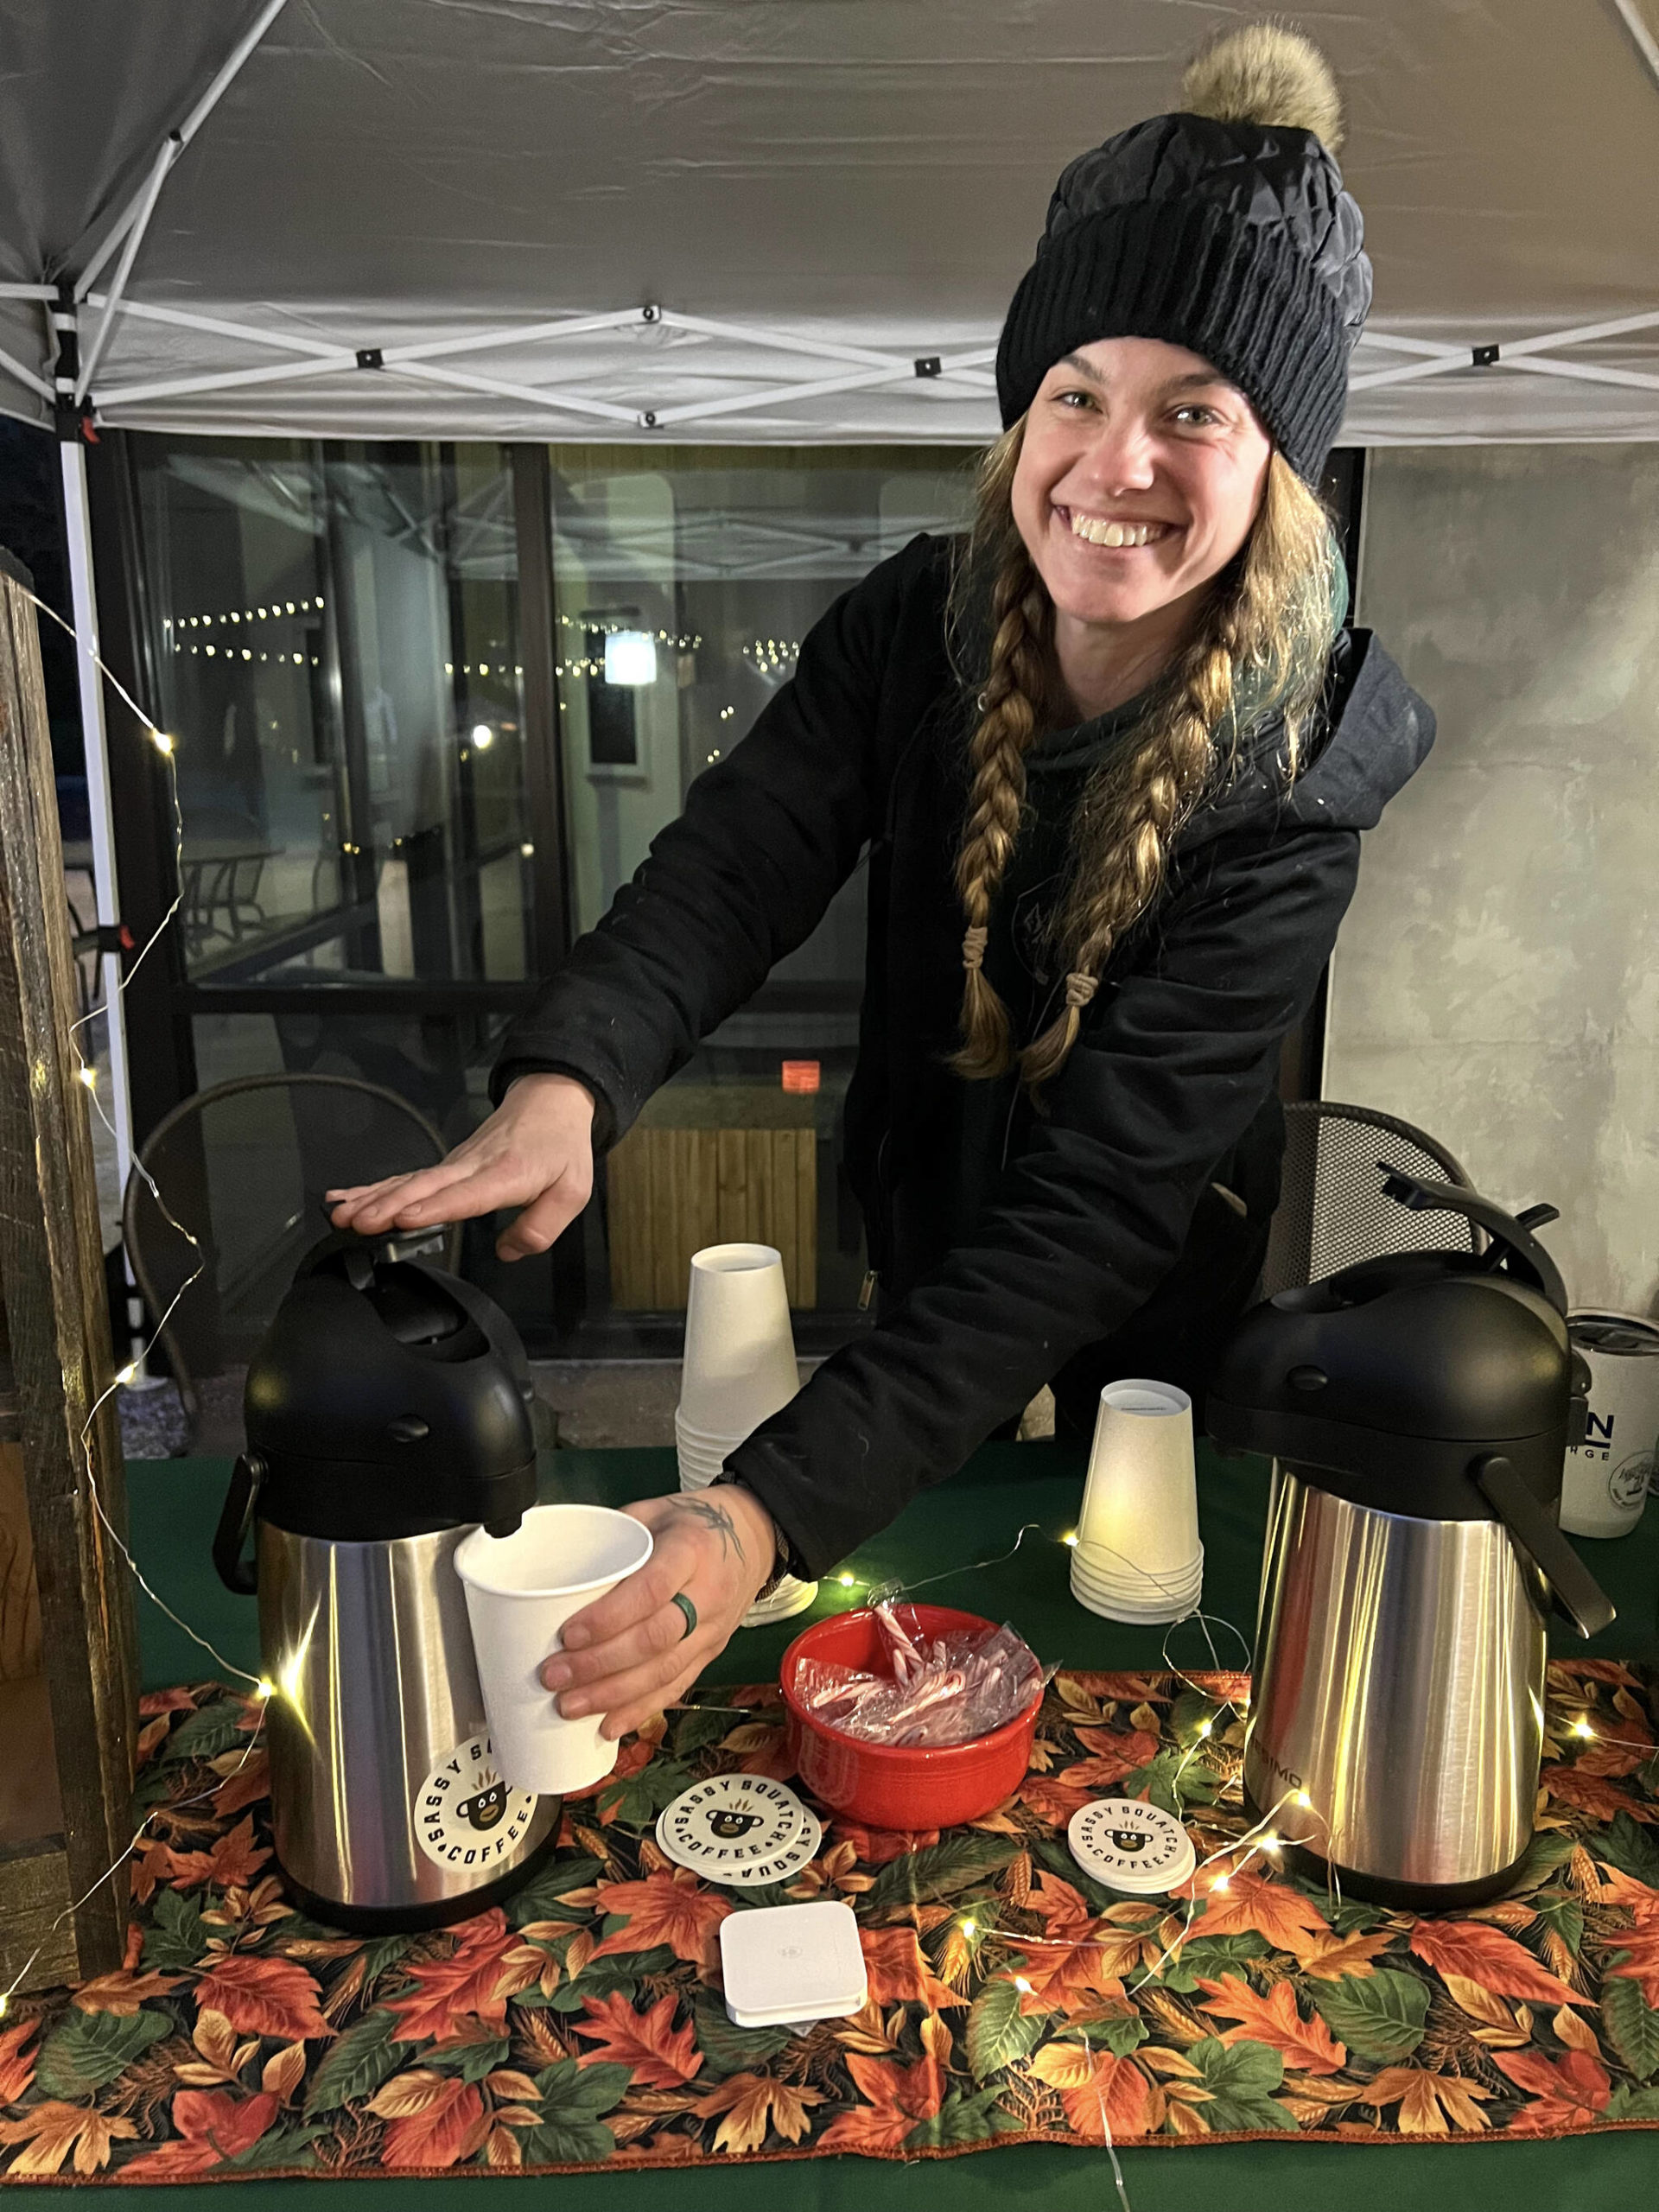 Lauren Petush pumps samples of Sassy Squatch Coffee for visitors.